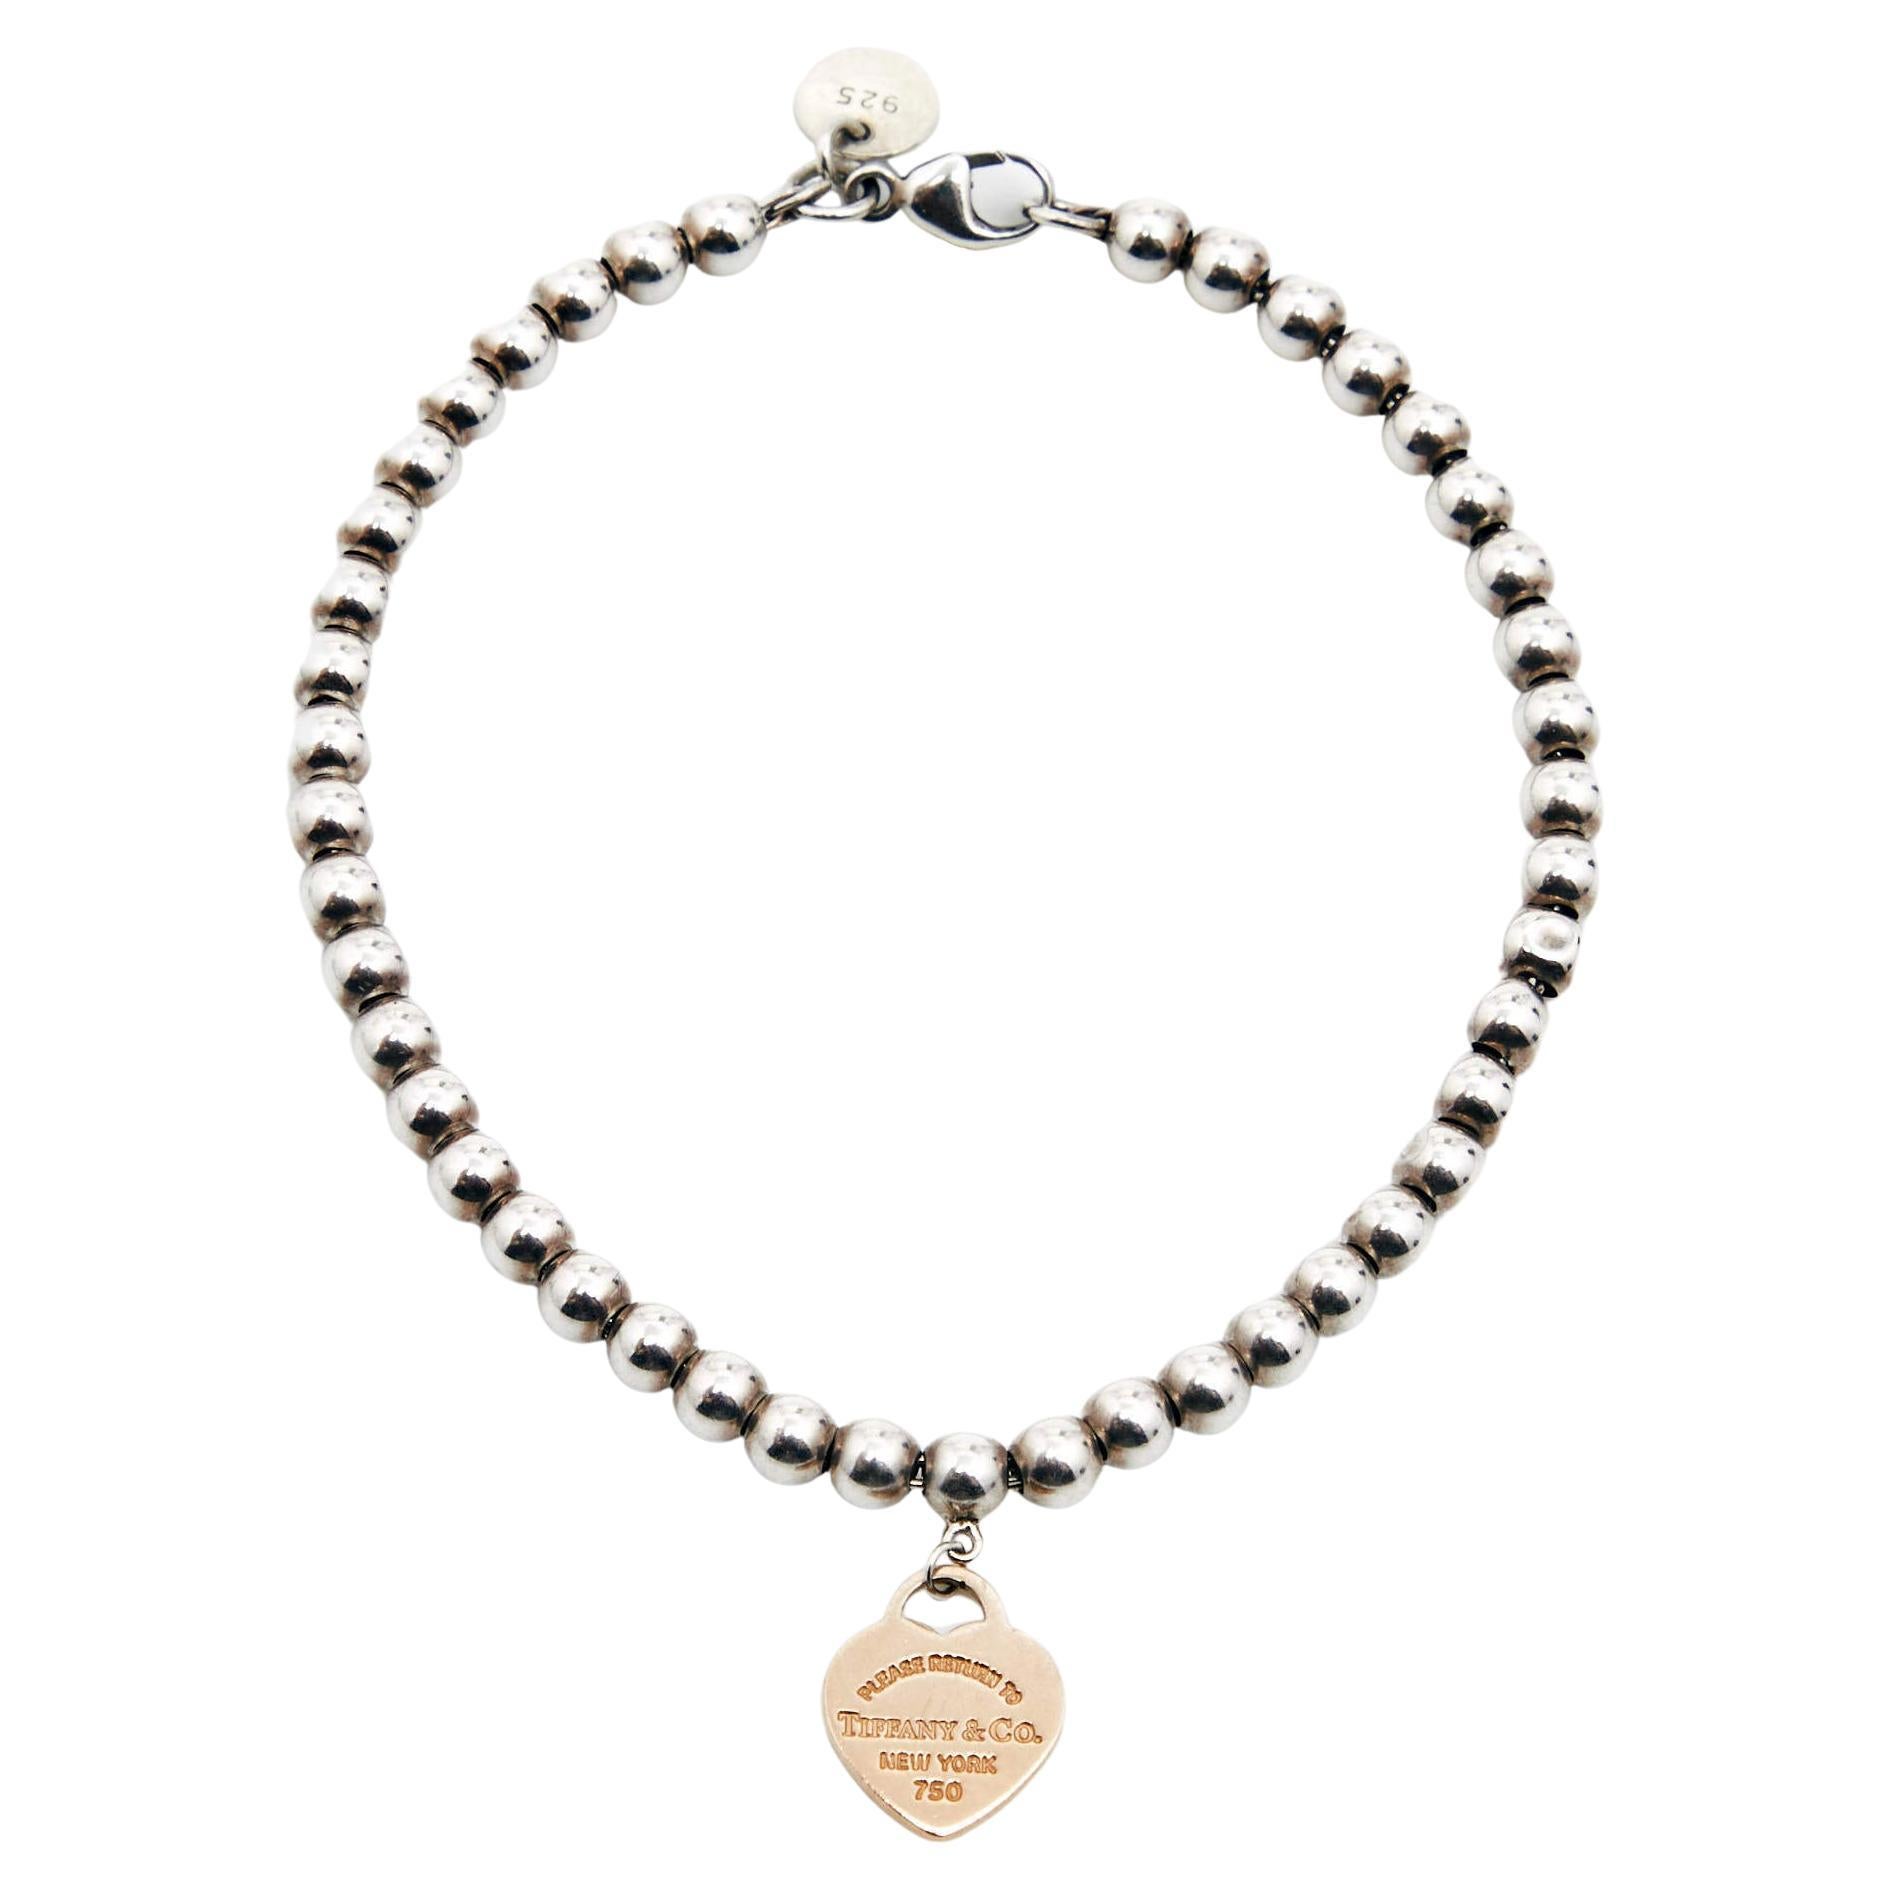 Audrey Ball Bracelet - Small wrist size – Bellagio & Co.